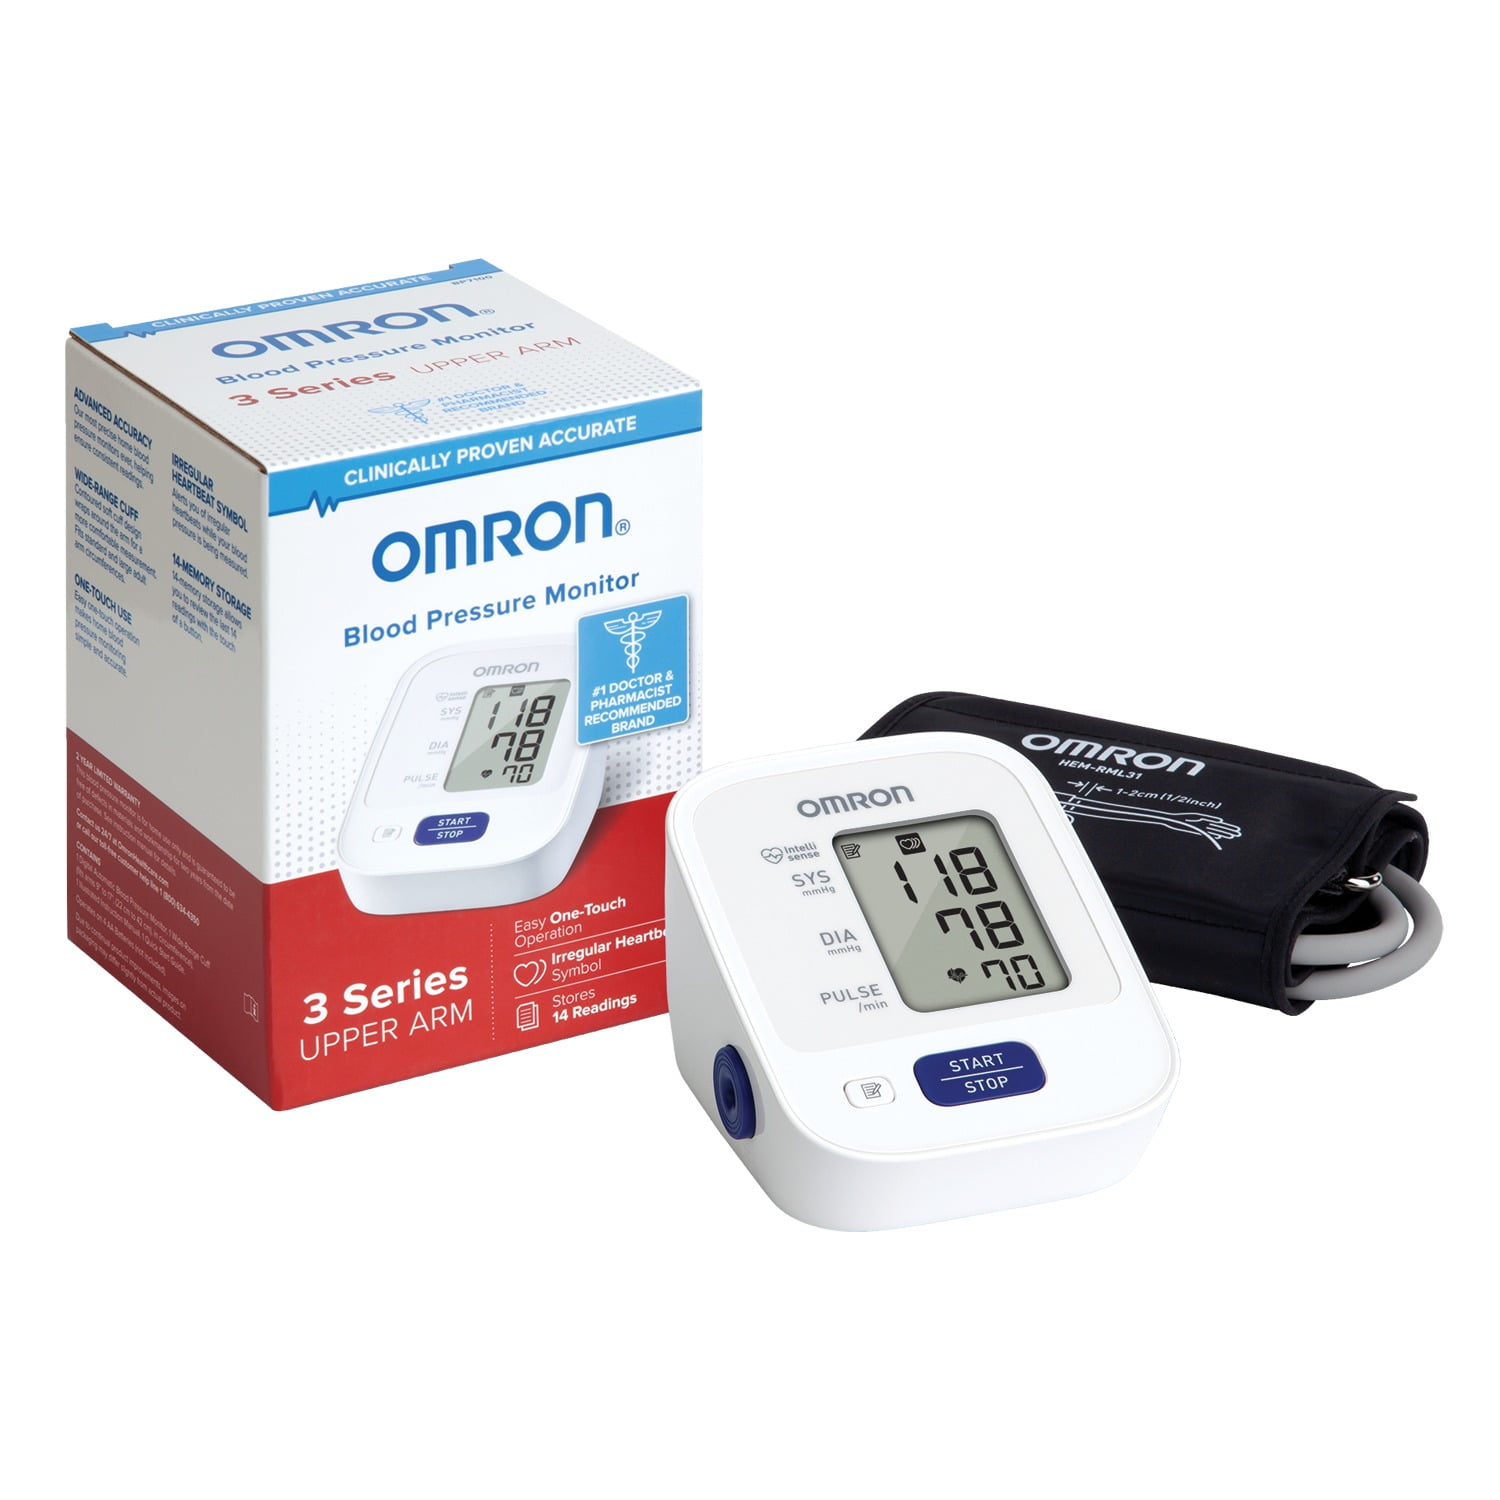 OMRON 3 Series Blood Pressure Monitor (BP7100), Upper Arm Cuff, Digital Blood Pressure Machine, Stores Up To 14 Readings - Walmart.com